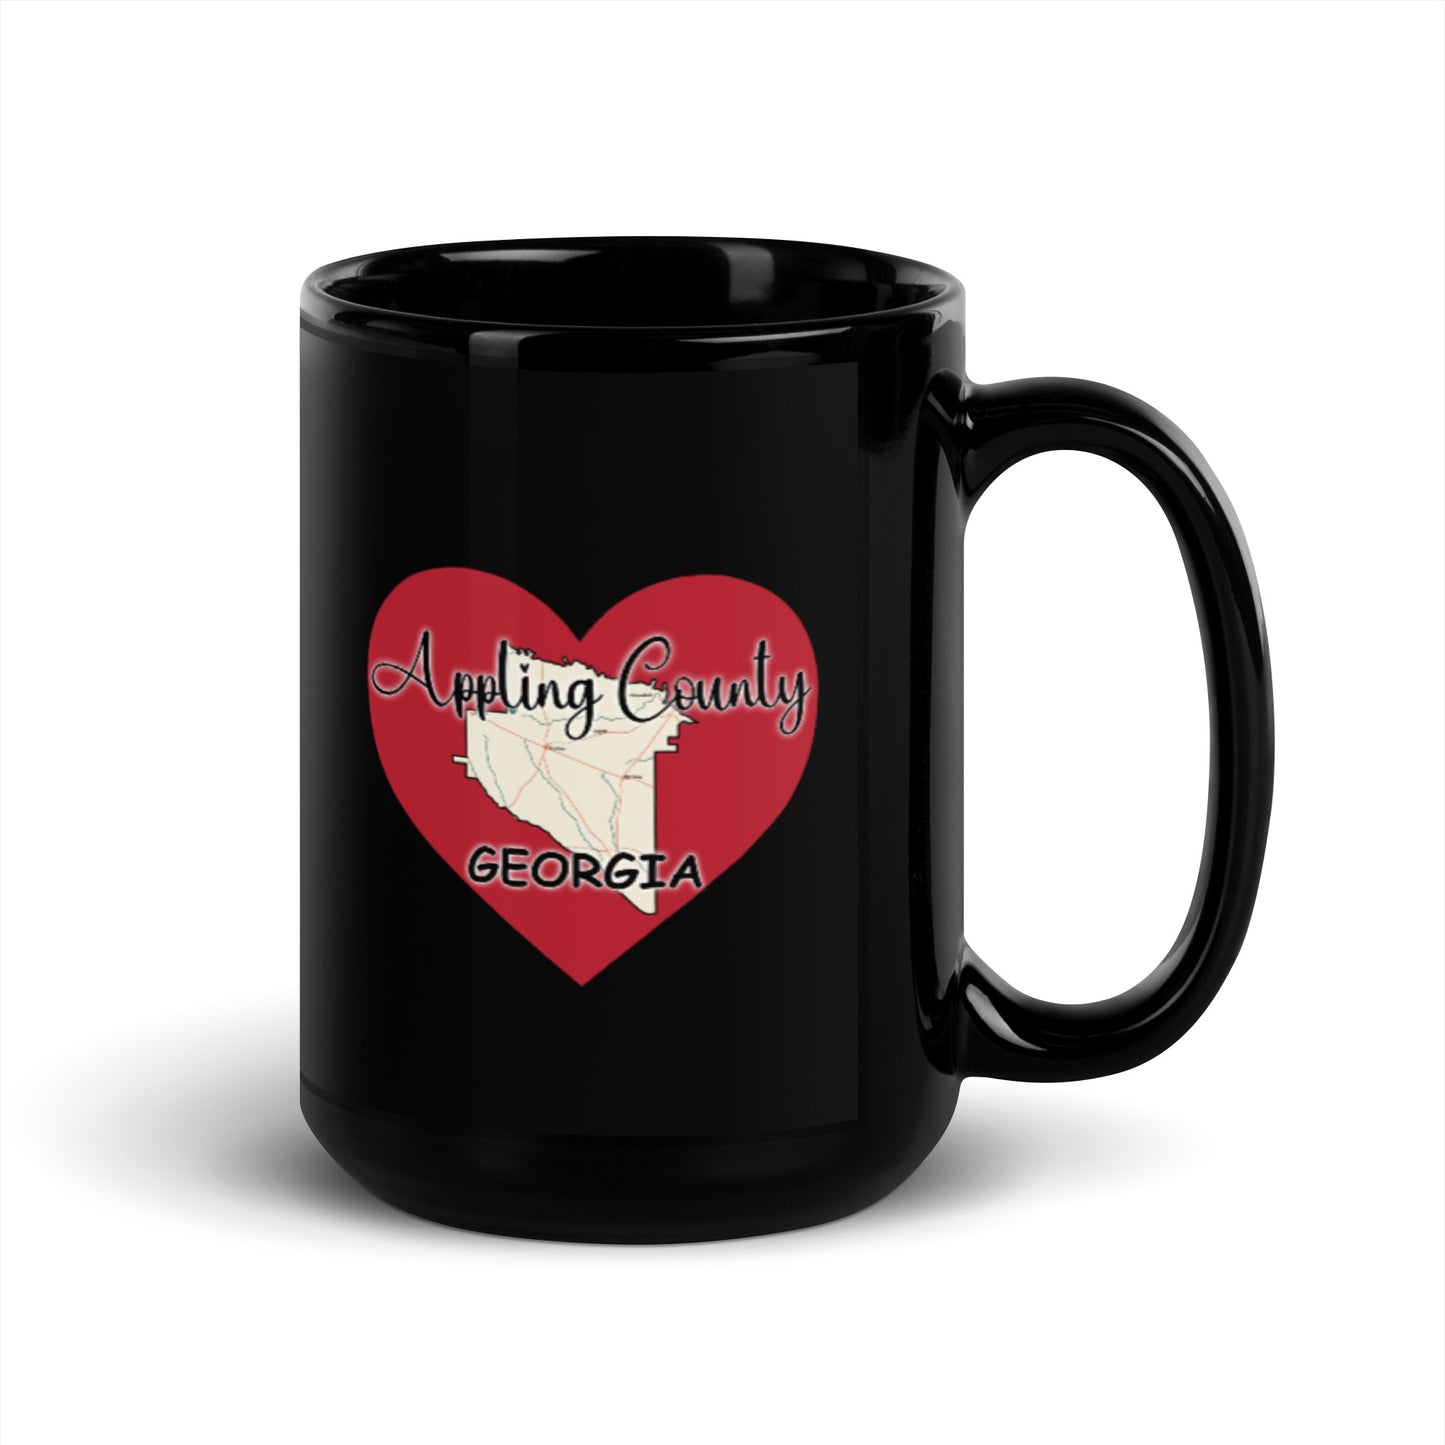 Appling County Map on Heart Black Glossy Ceramic Coffee Mug